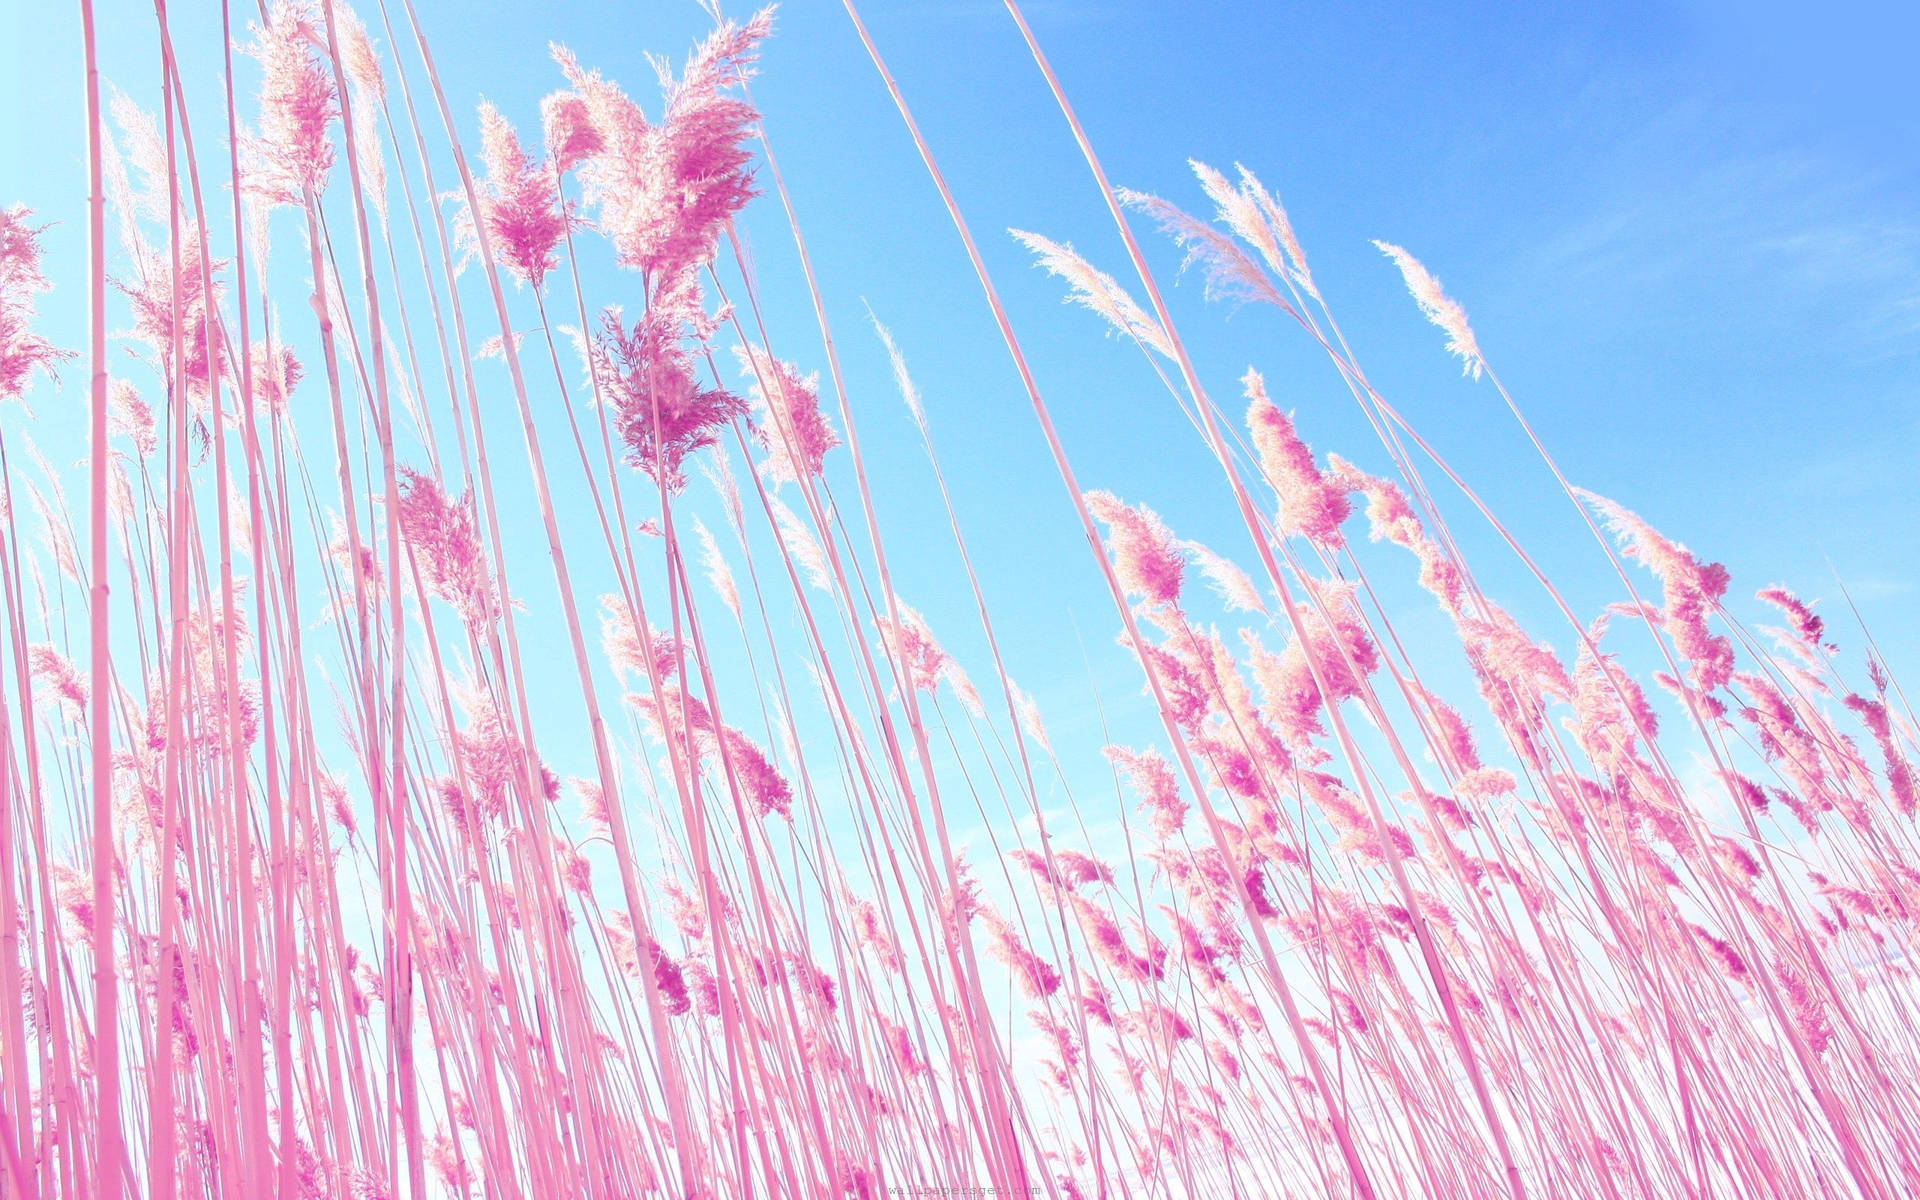 Pink Field Under Blue Sky Background